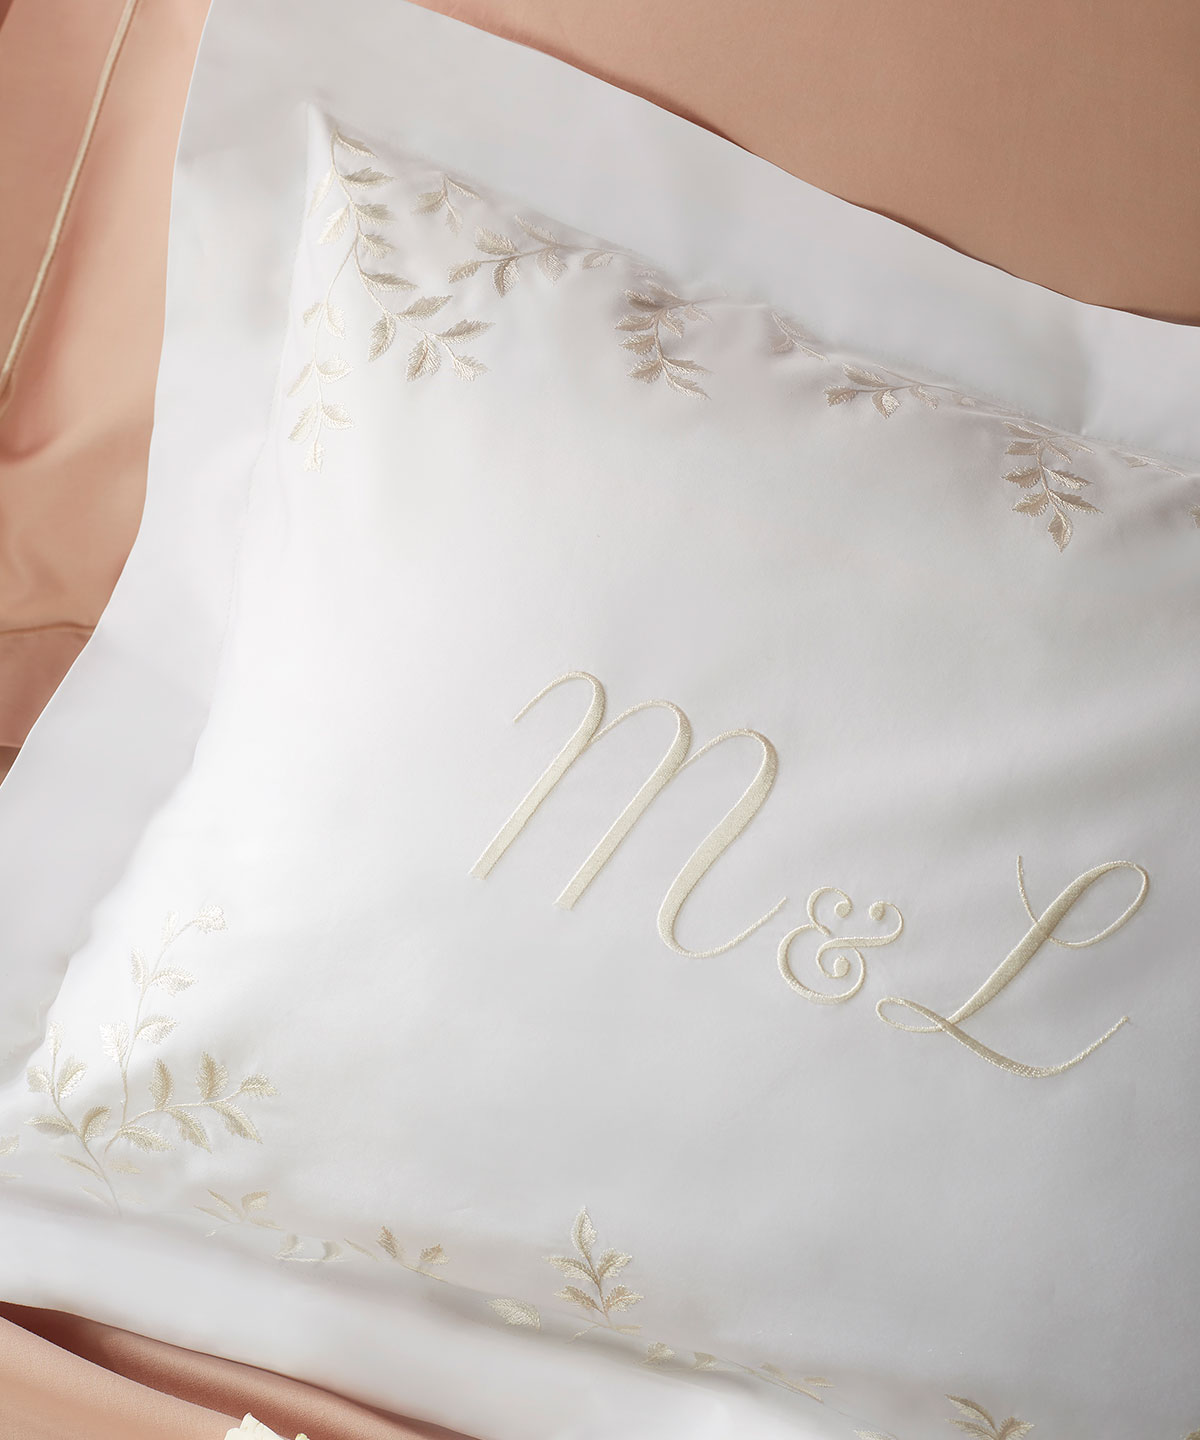 Couple Monogram Pillow Cover